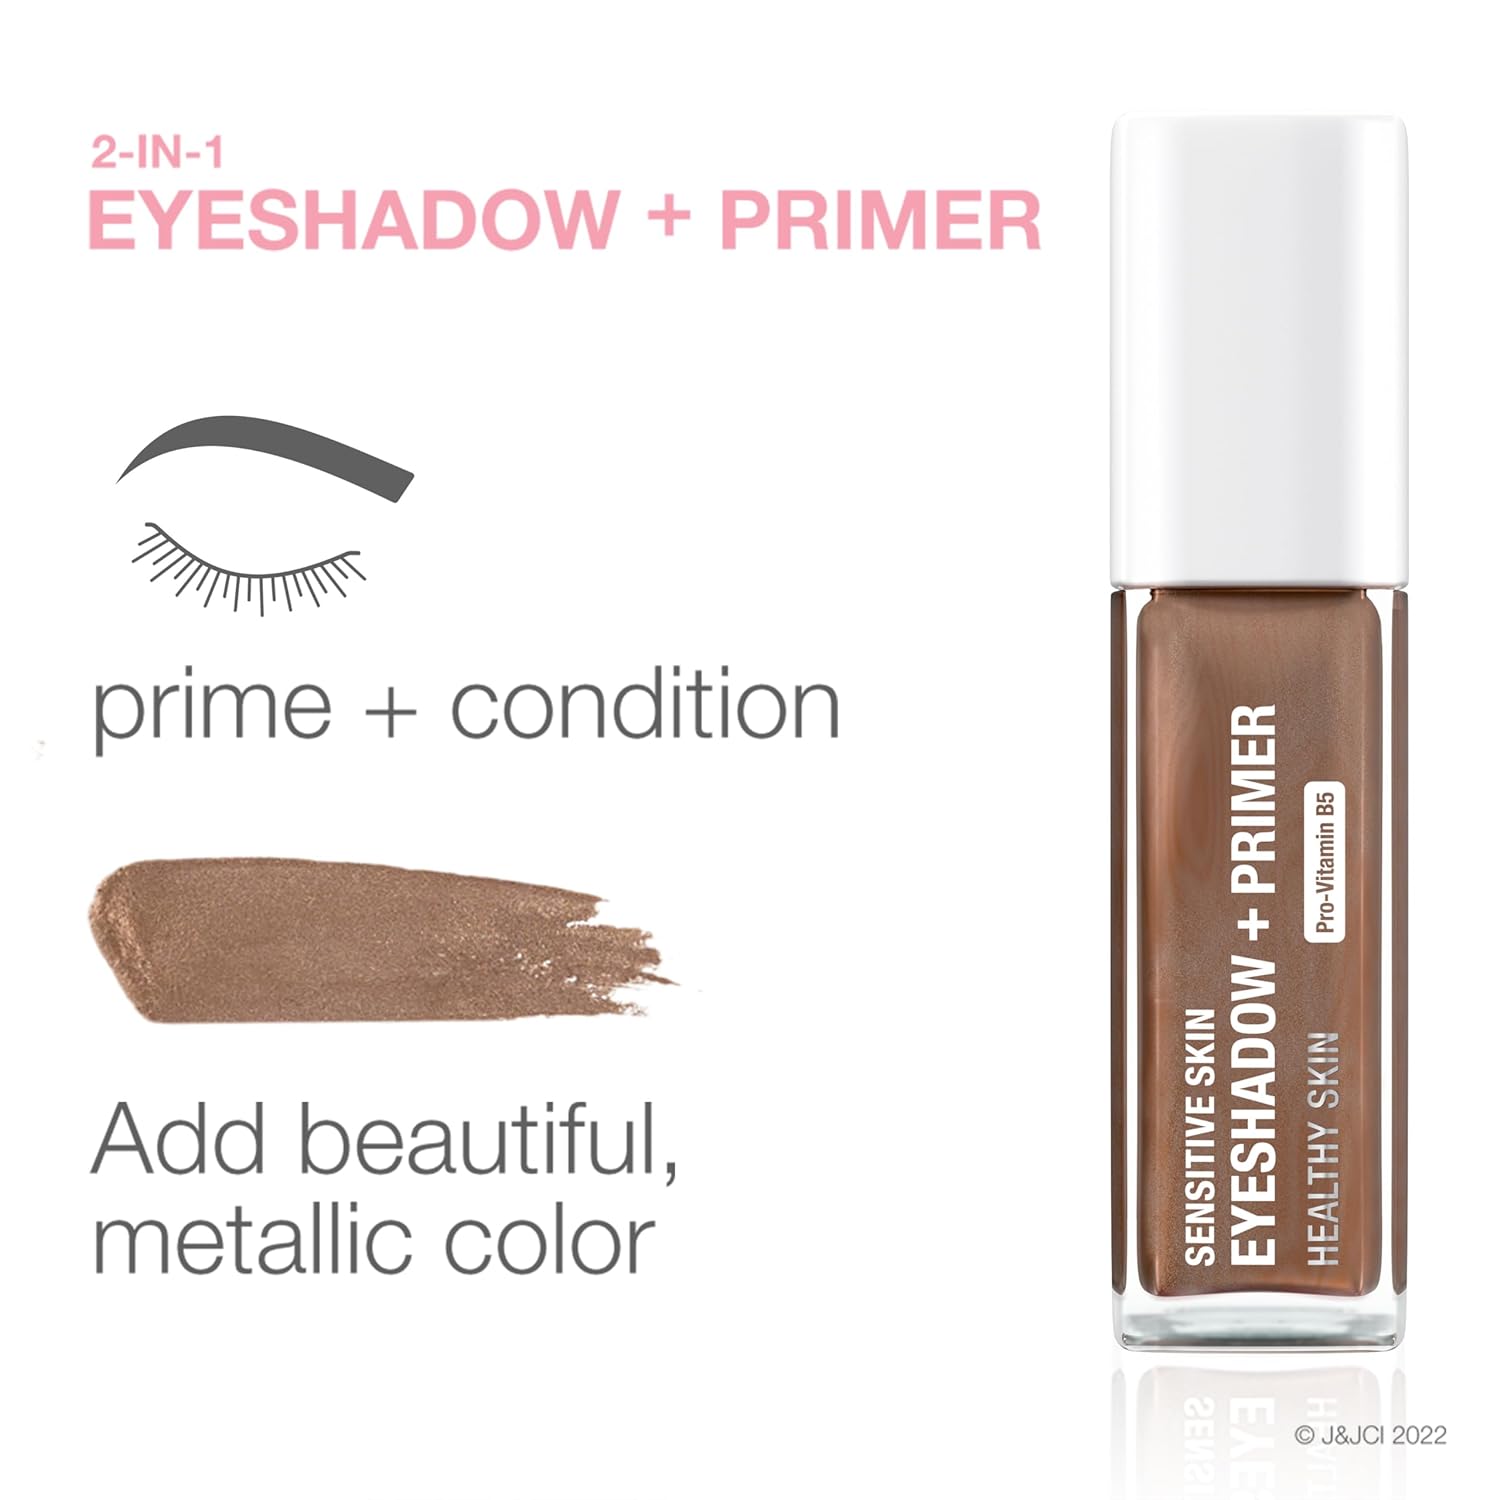 Neutrogena Sensitive Skin Eyeshadow + Primer, a Longwearing, 2-in-1 Metallic Eyeshadow for Sensitive Skin with Pro-Vitamin B5, Lightweight Cream-to-Powder Formula, Warm Taupe, 0.22 oz : Beauty & Personal Care